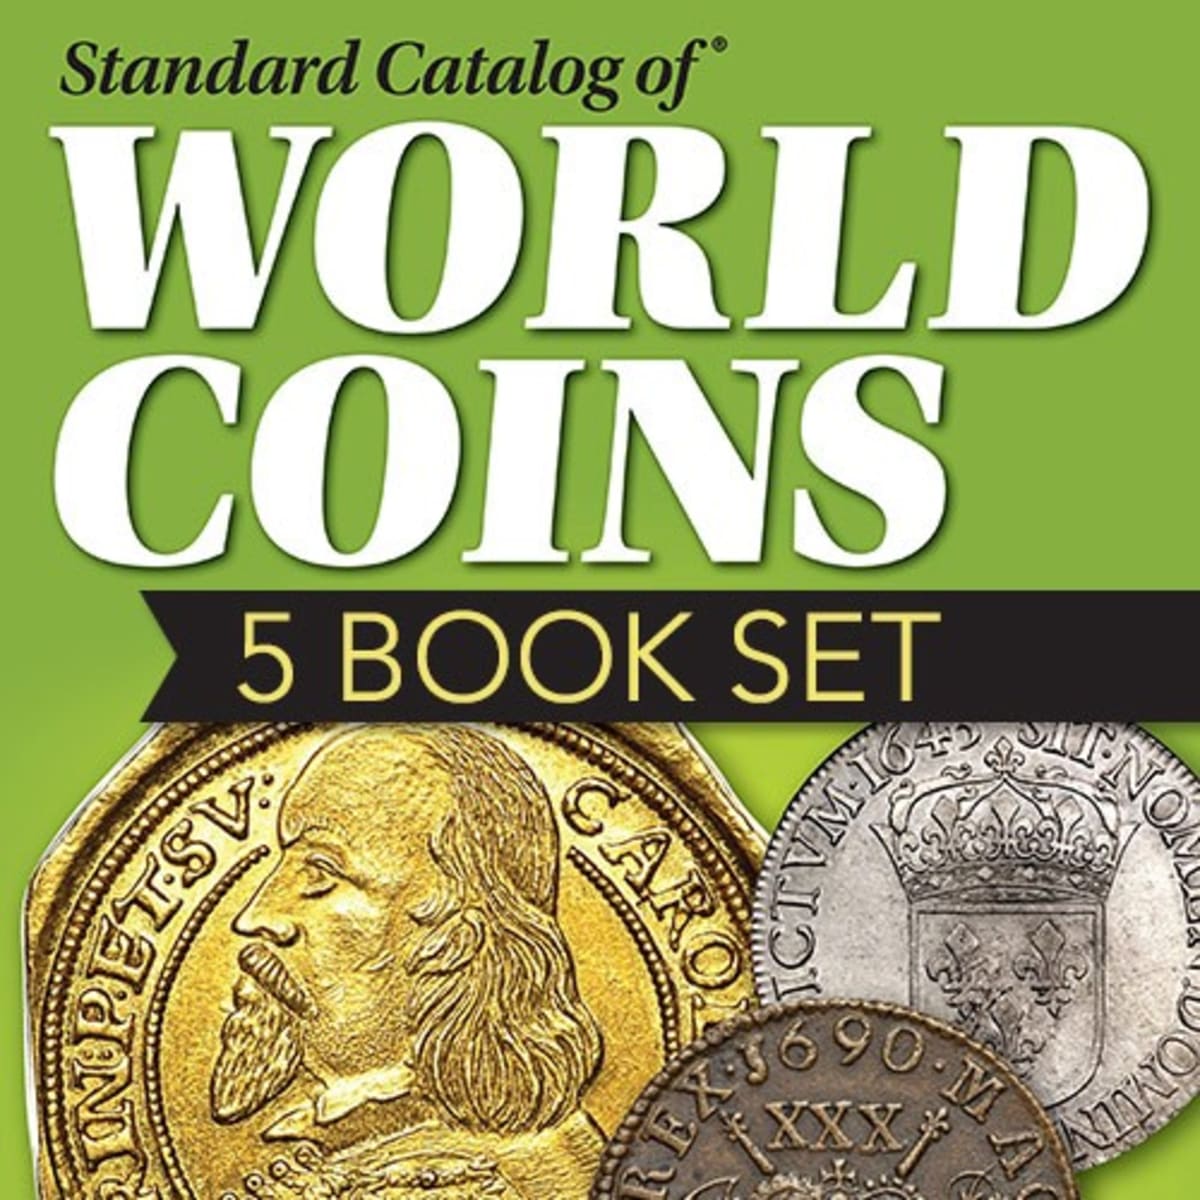 Standard Catalog of World Coins 5 Book Set - Numismatic News